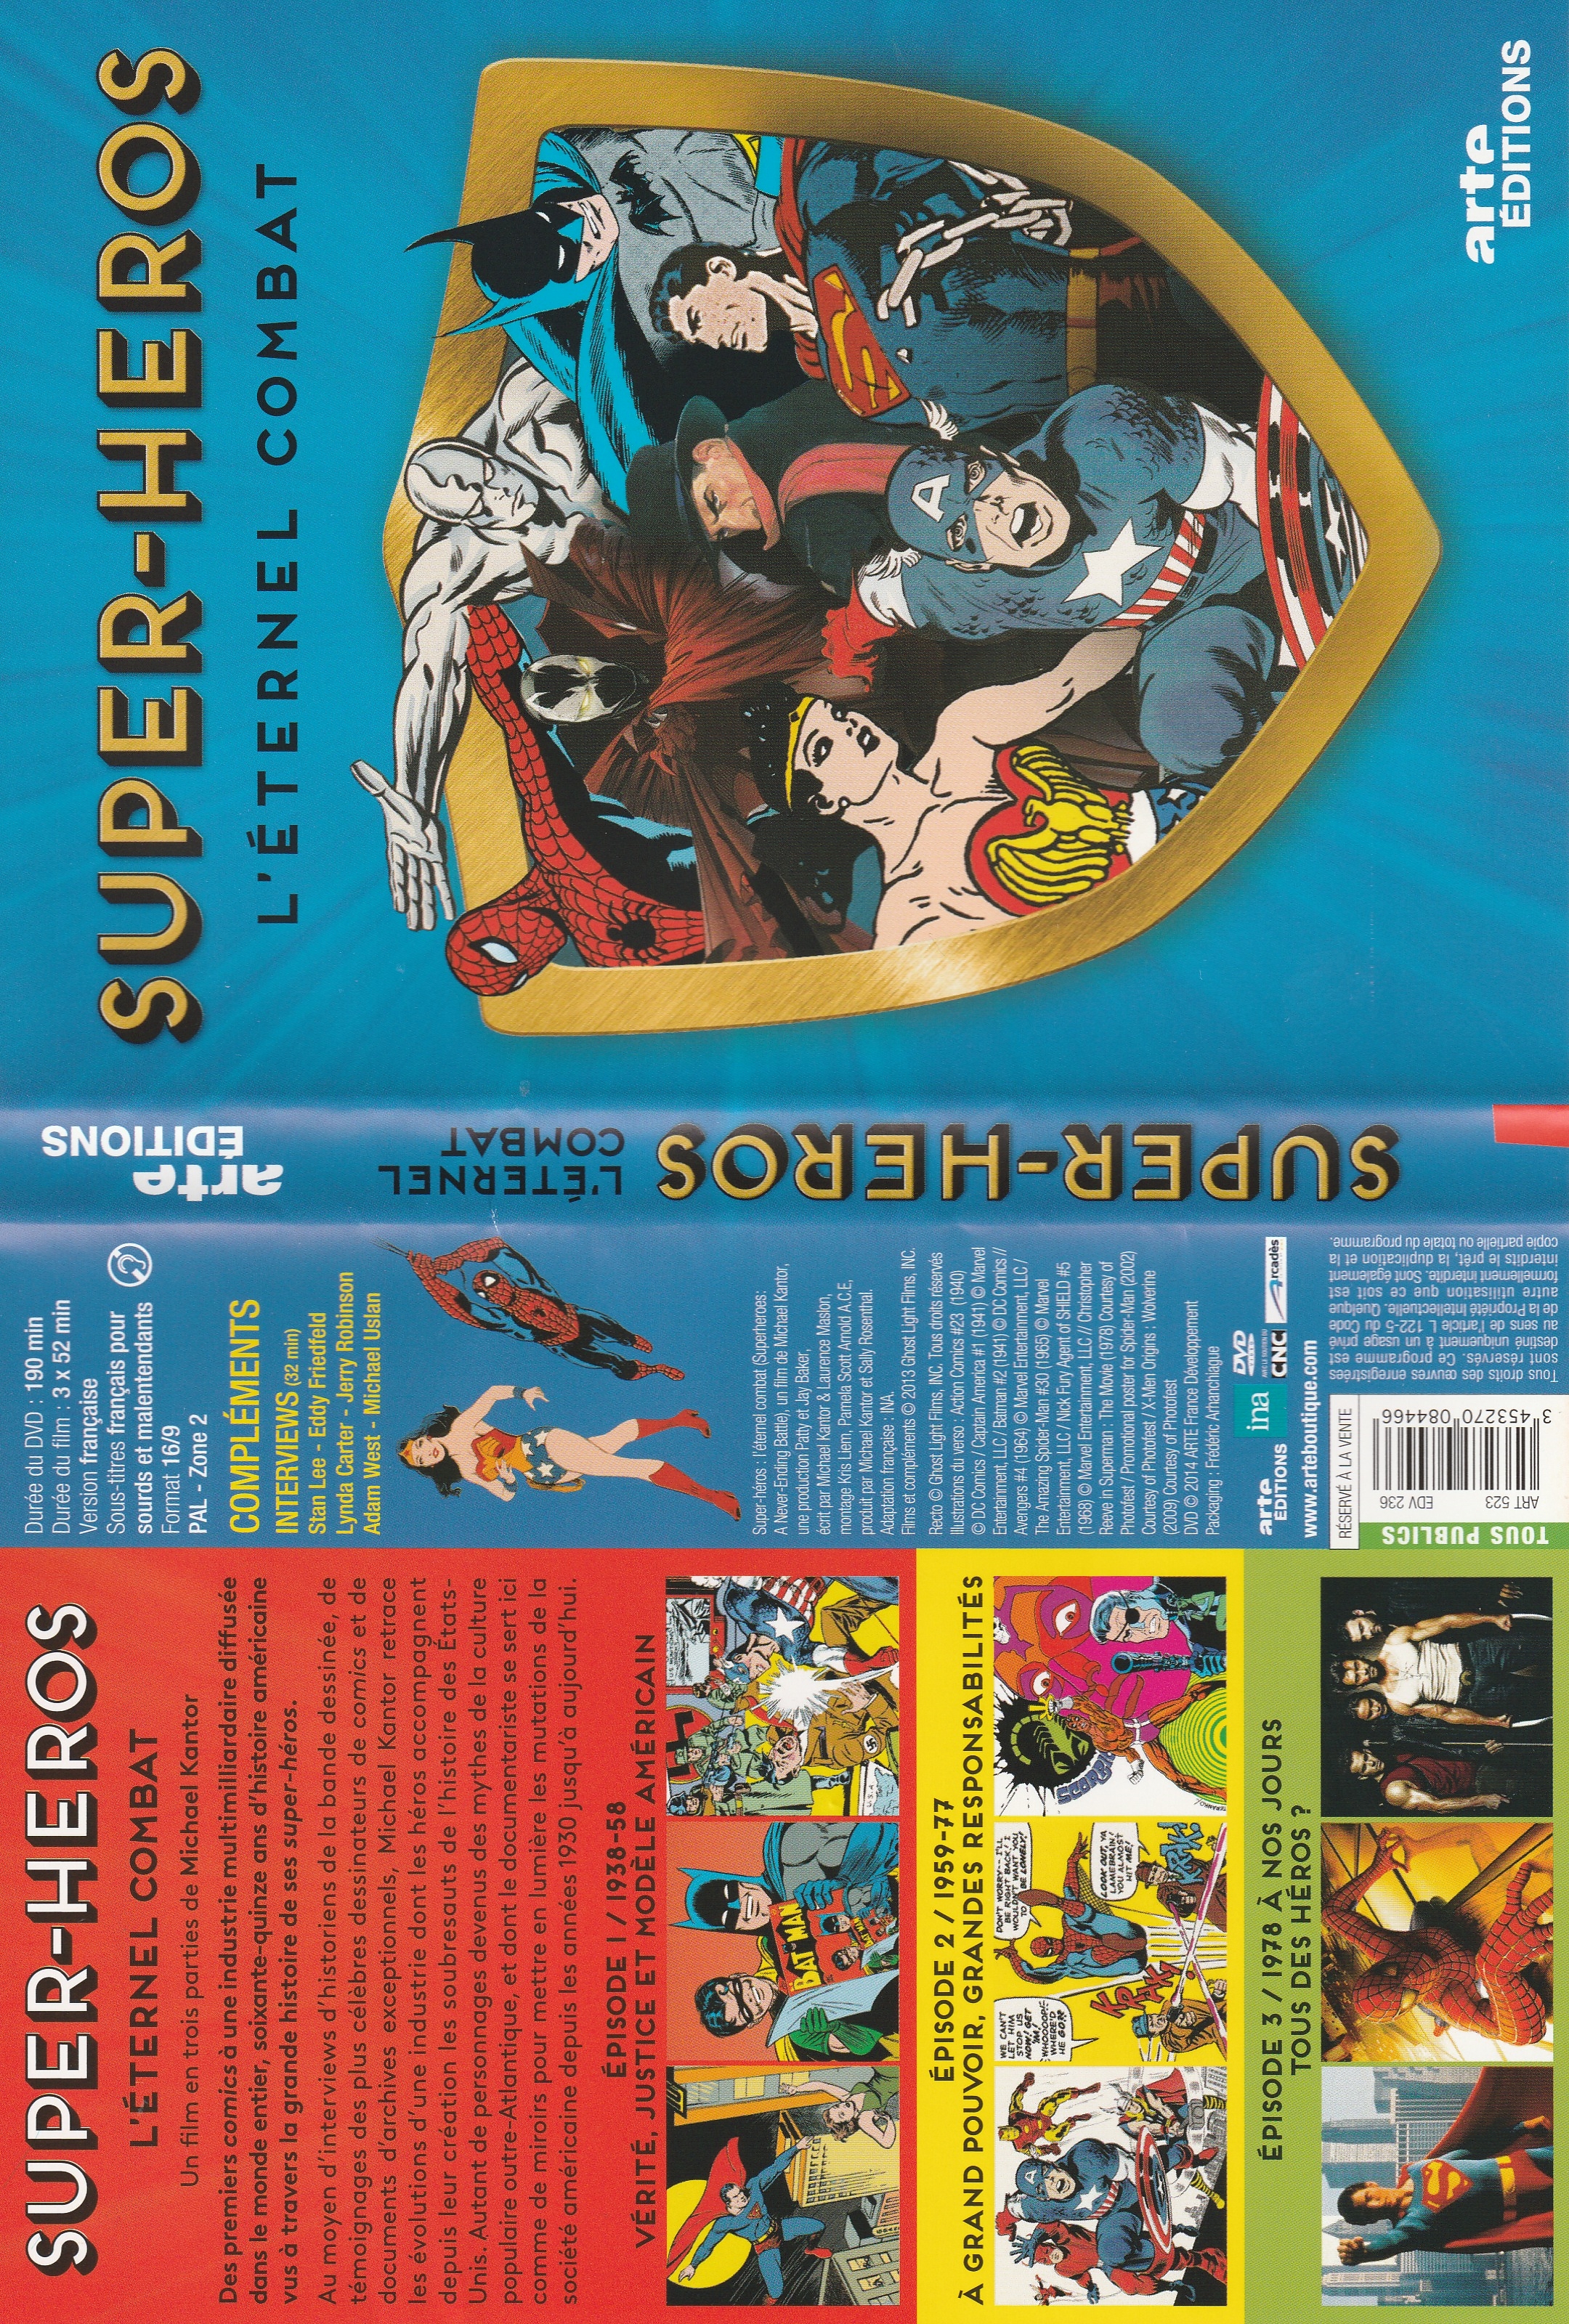 Jaquette DVD Super-heros L